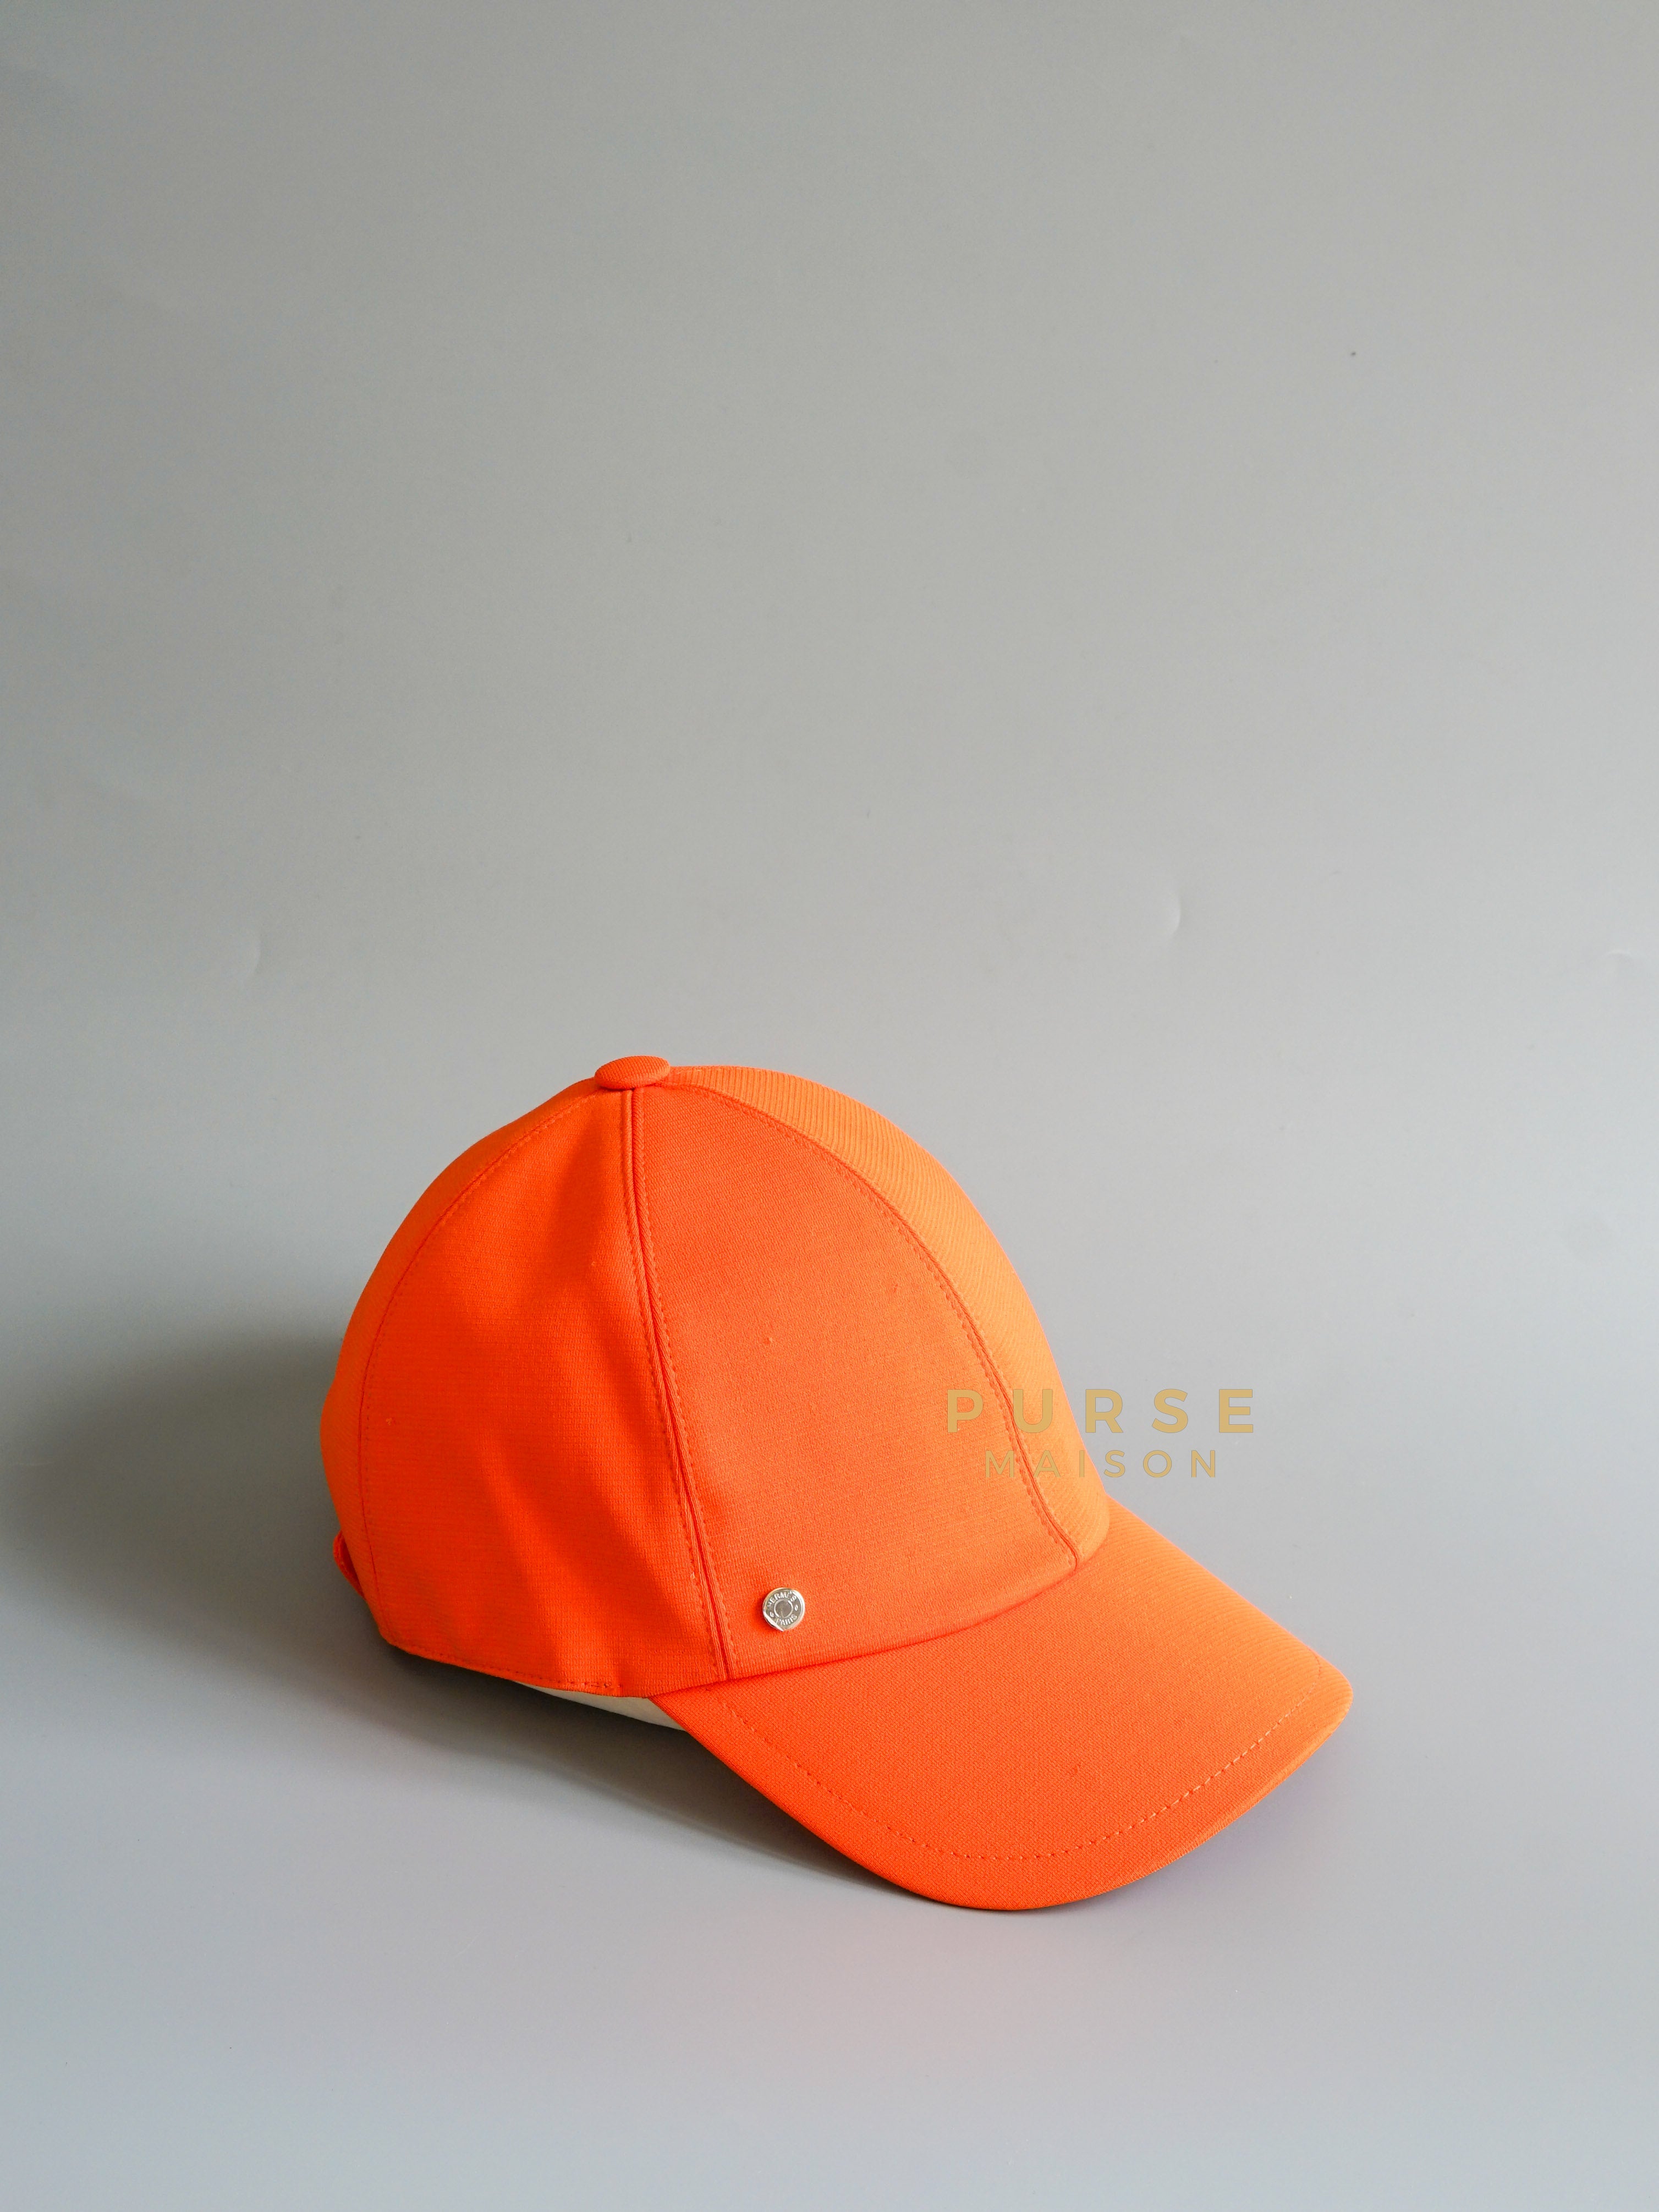 Hermes Baseball Cap (Orange) Size 57 | Purse Maison Luxury Bags Shop